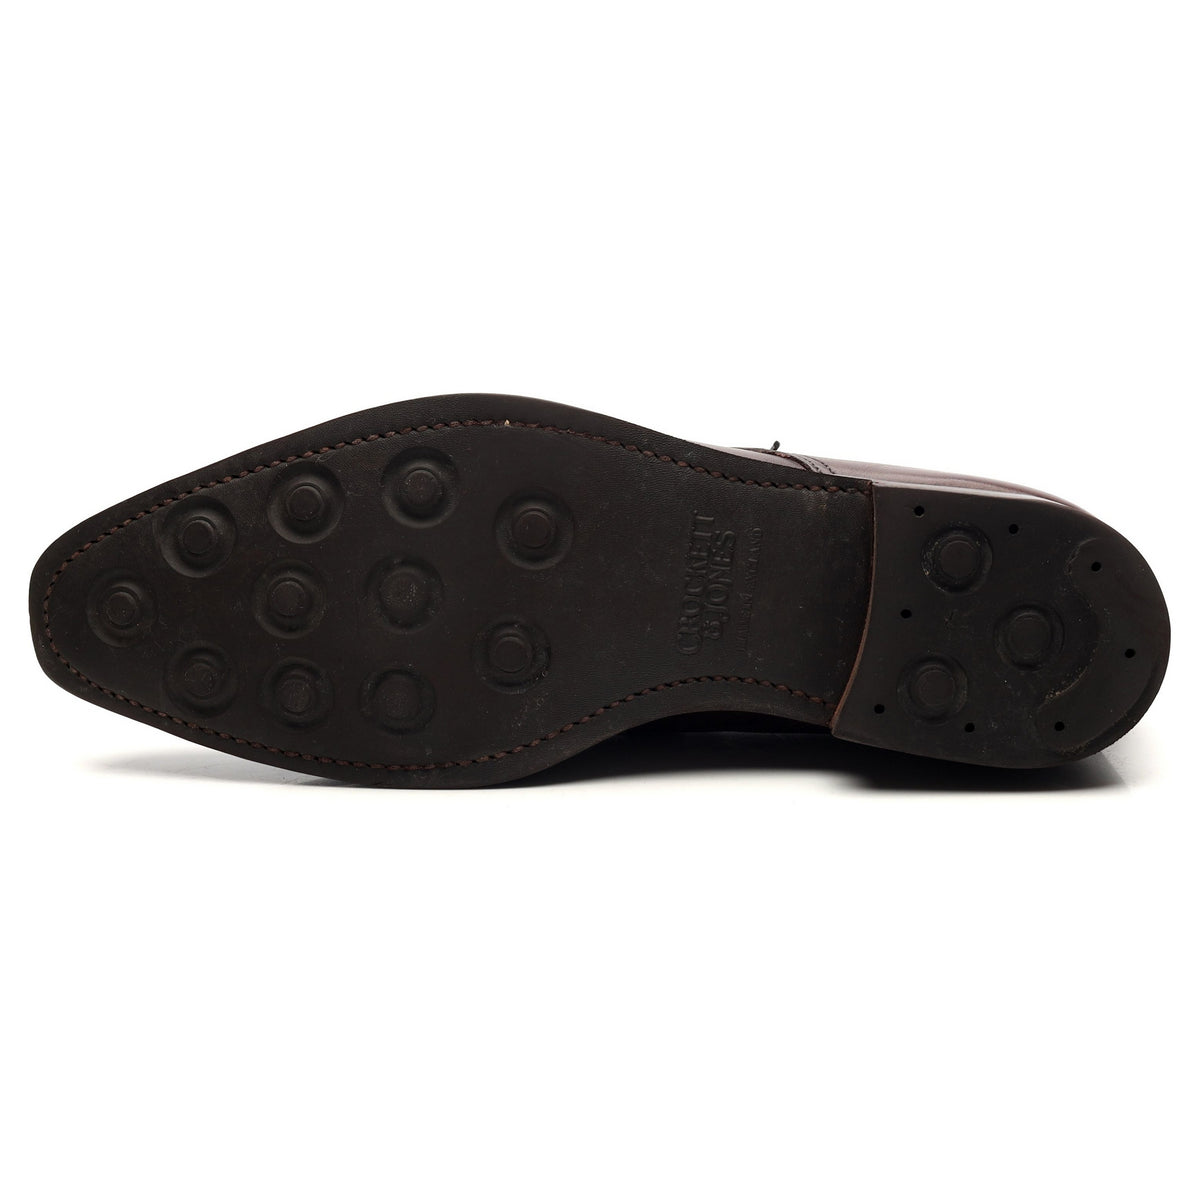 &#39;Tetbury&#39; Dark Brown Leather Chukka Boots UK 9 E